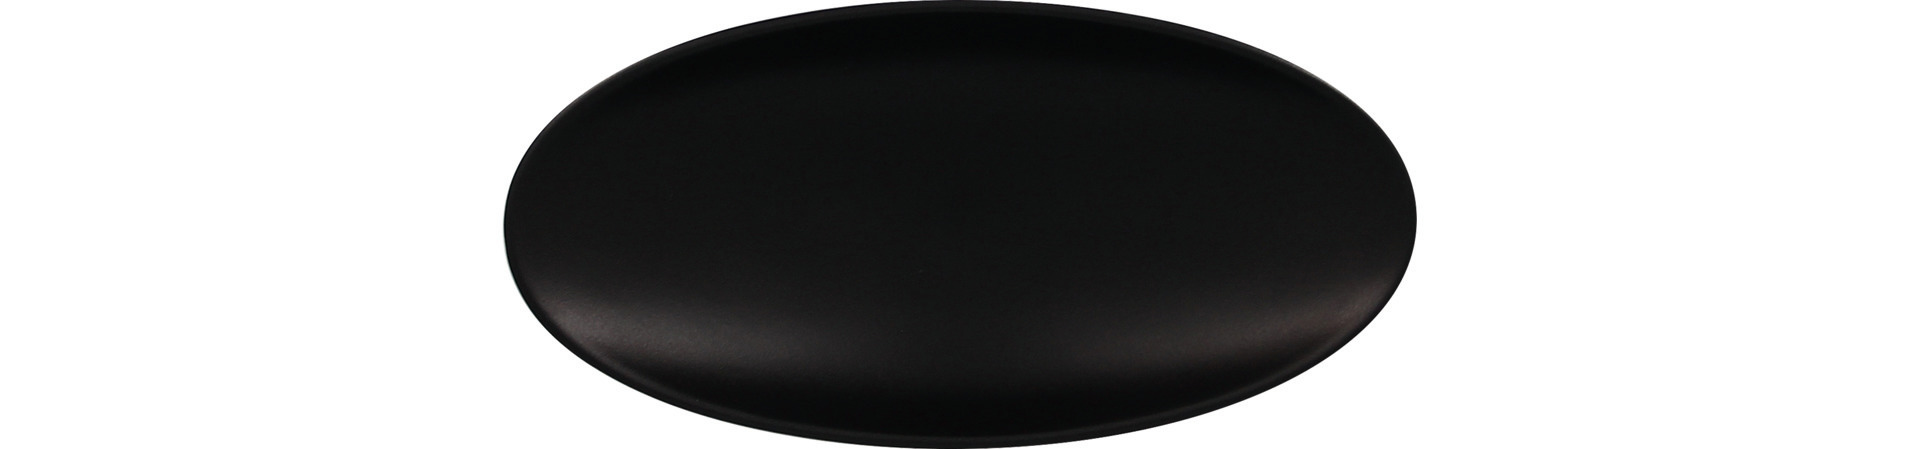 Schale oval 205 x 100 mm / 0,20 l black